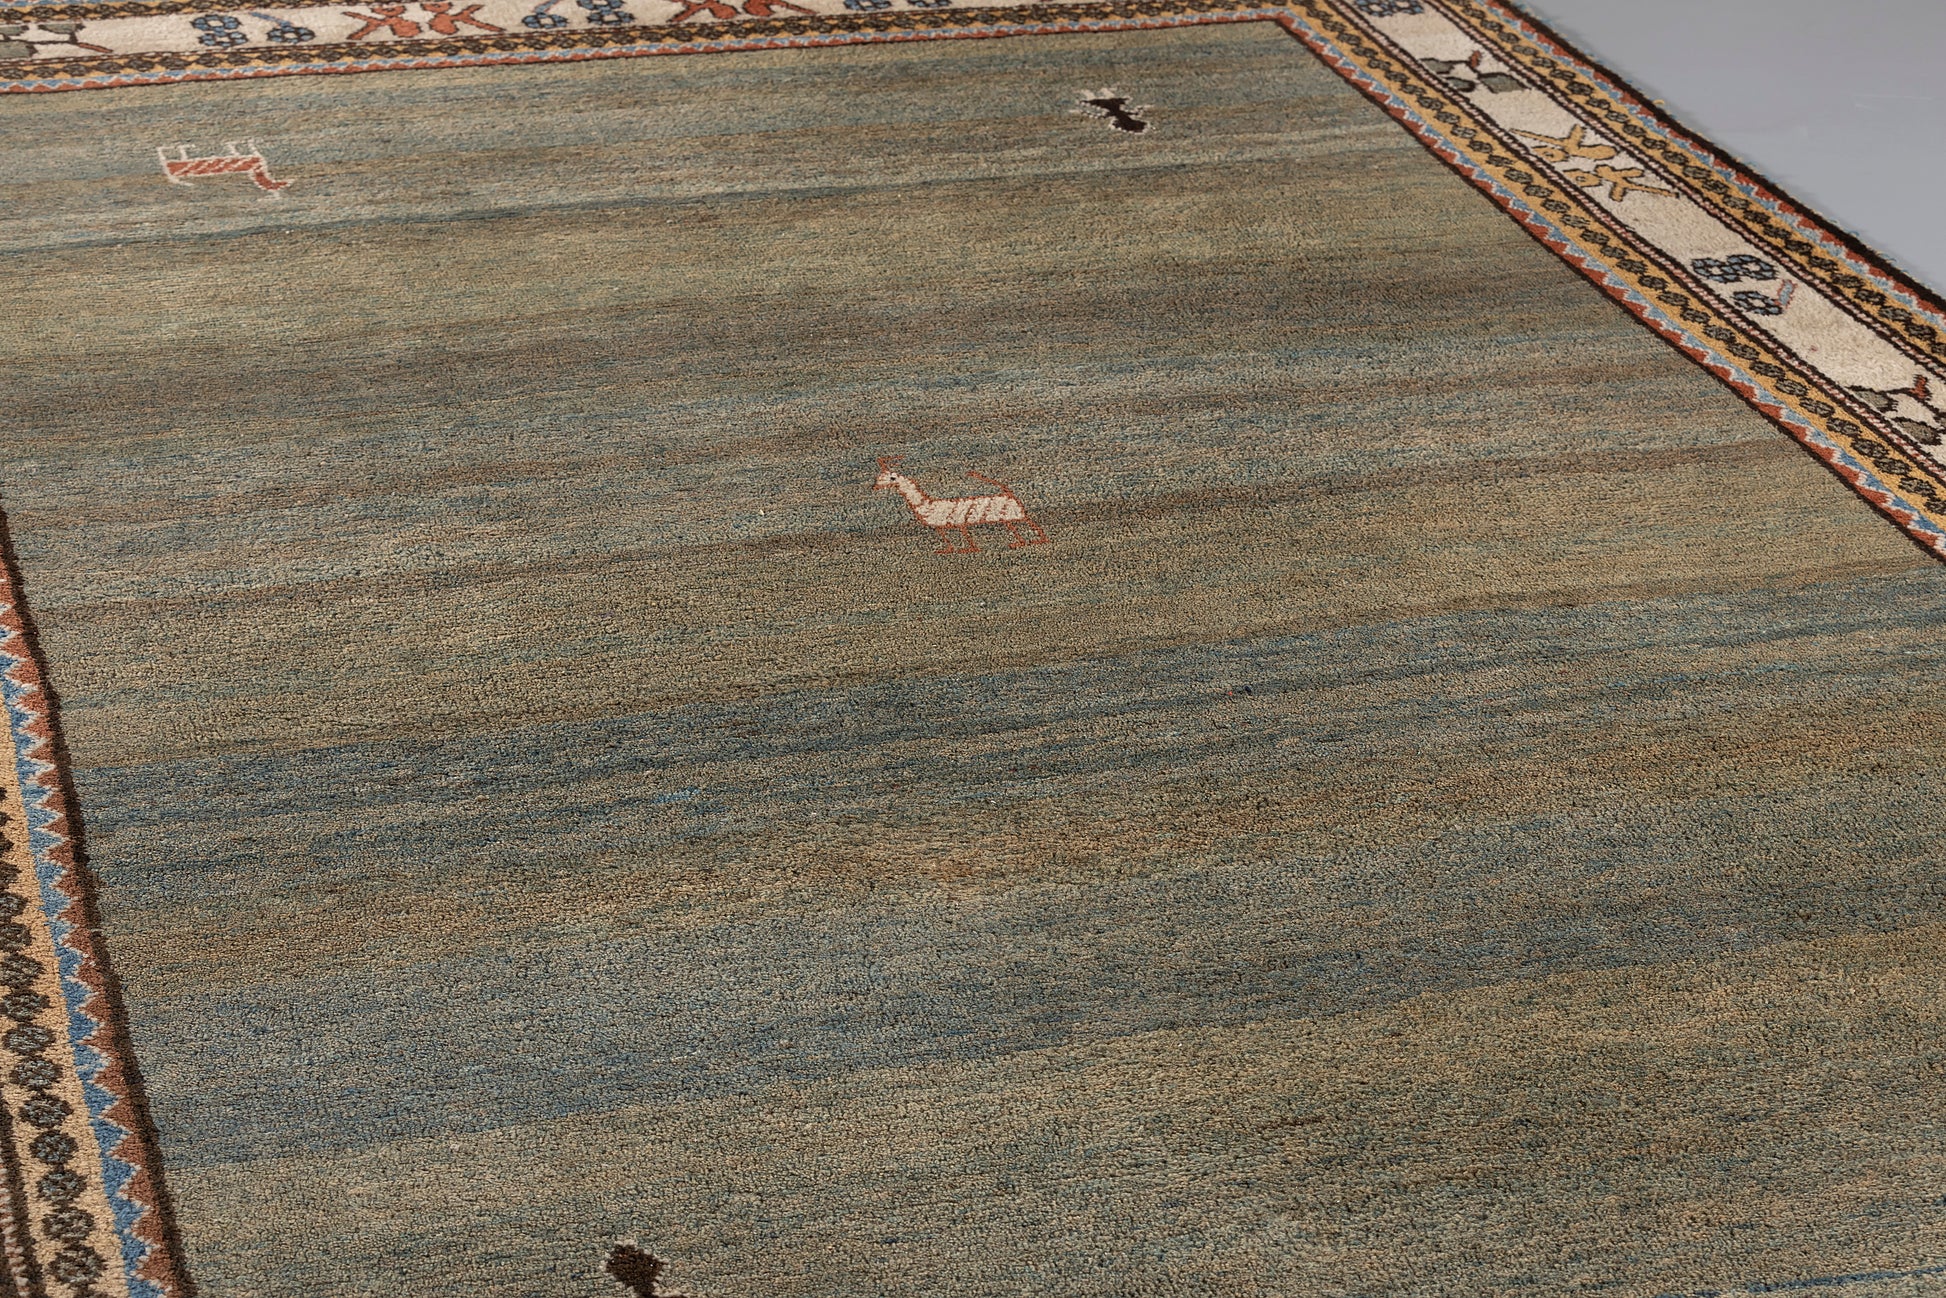 large oriental rug